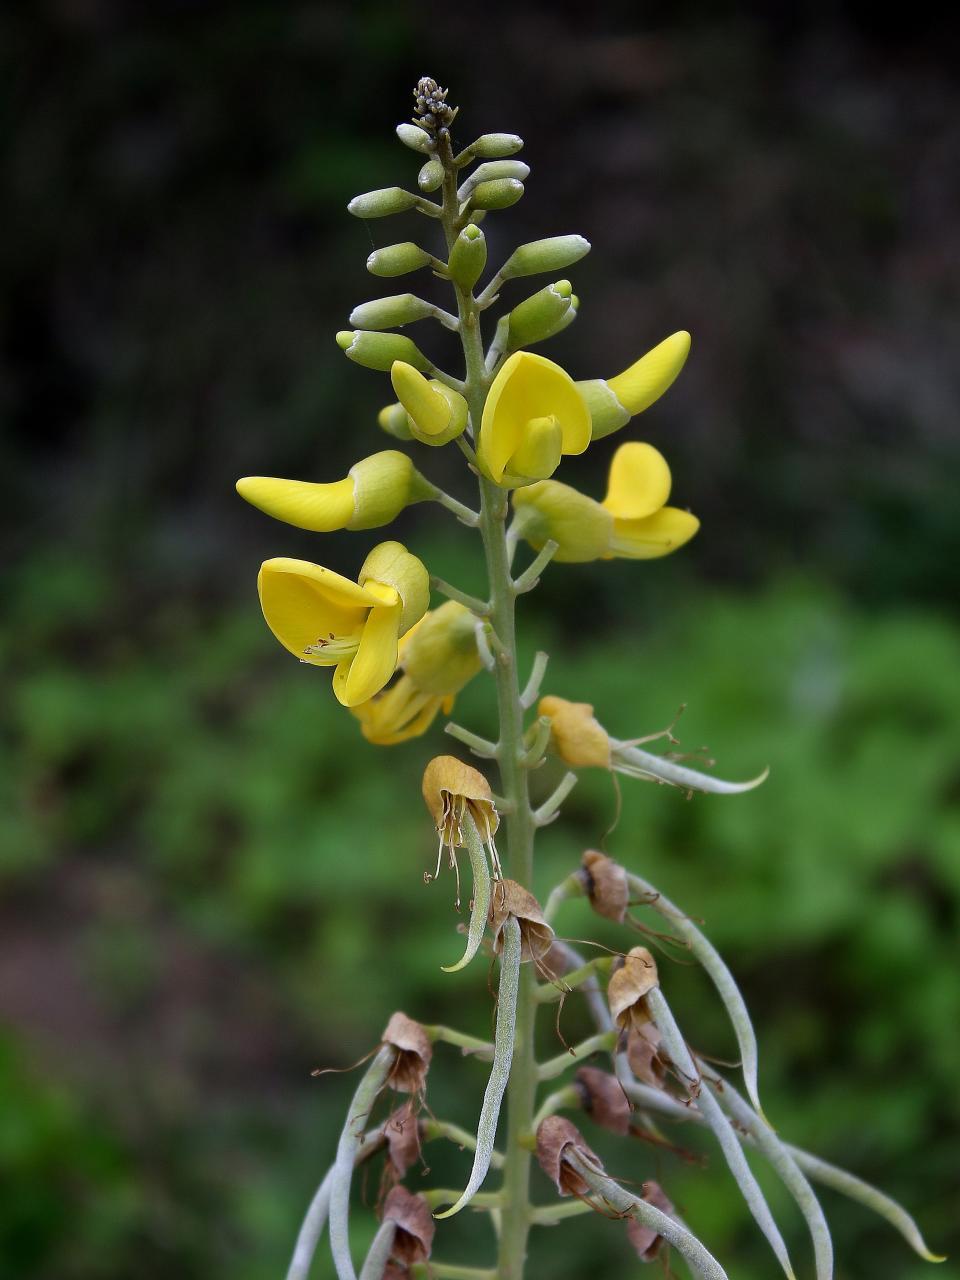 Image of yellow necklacepod